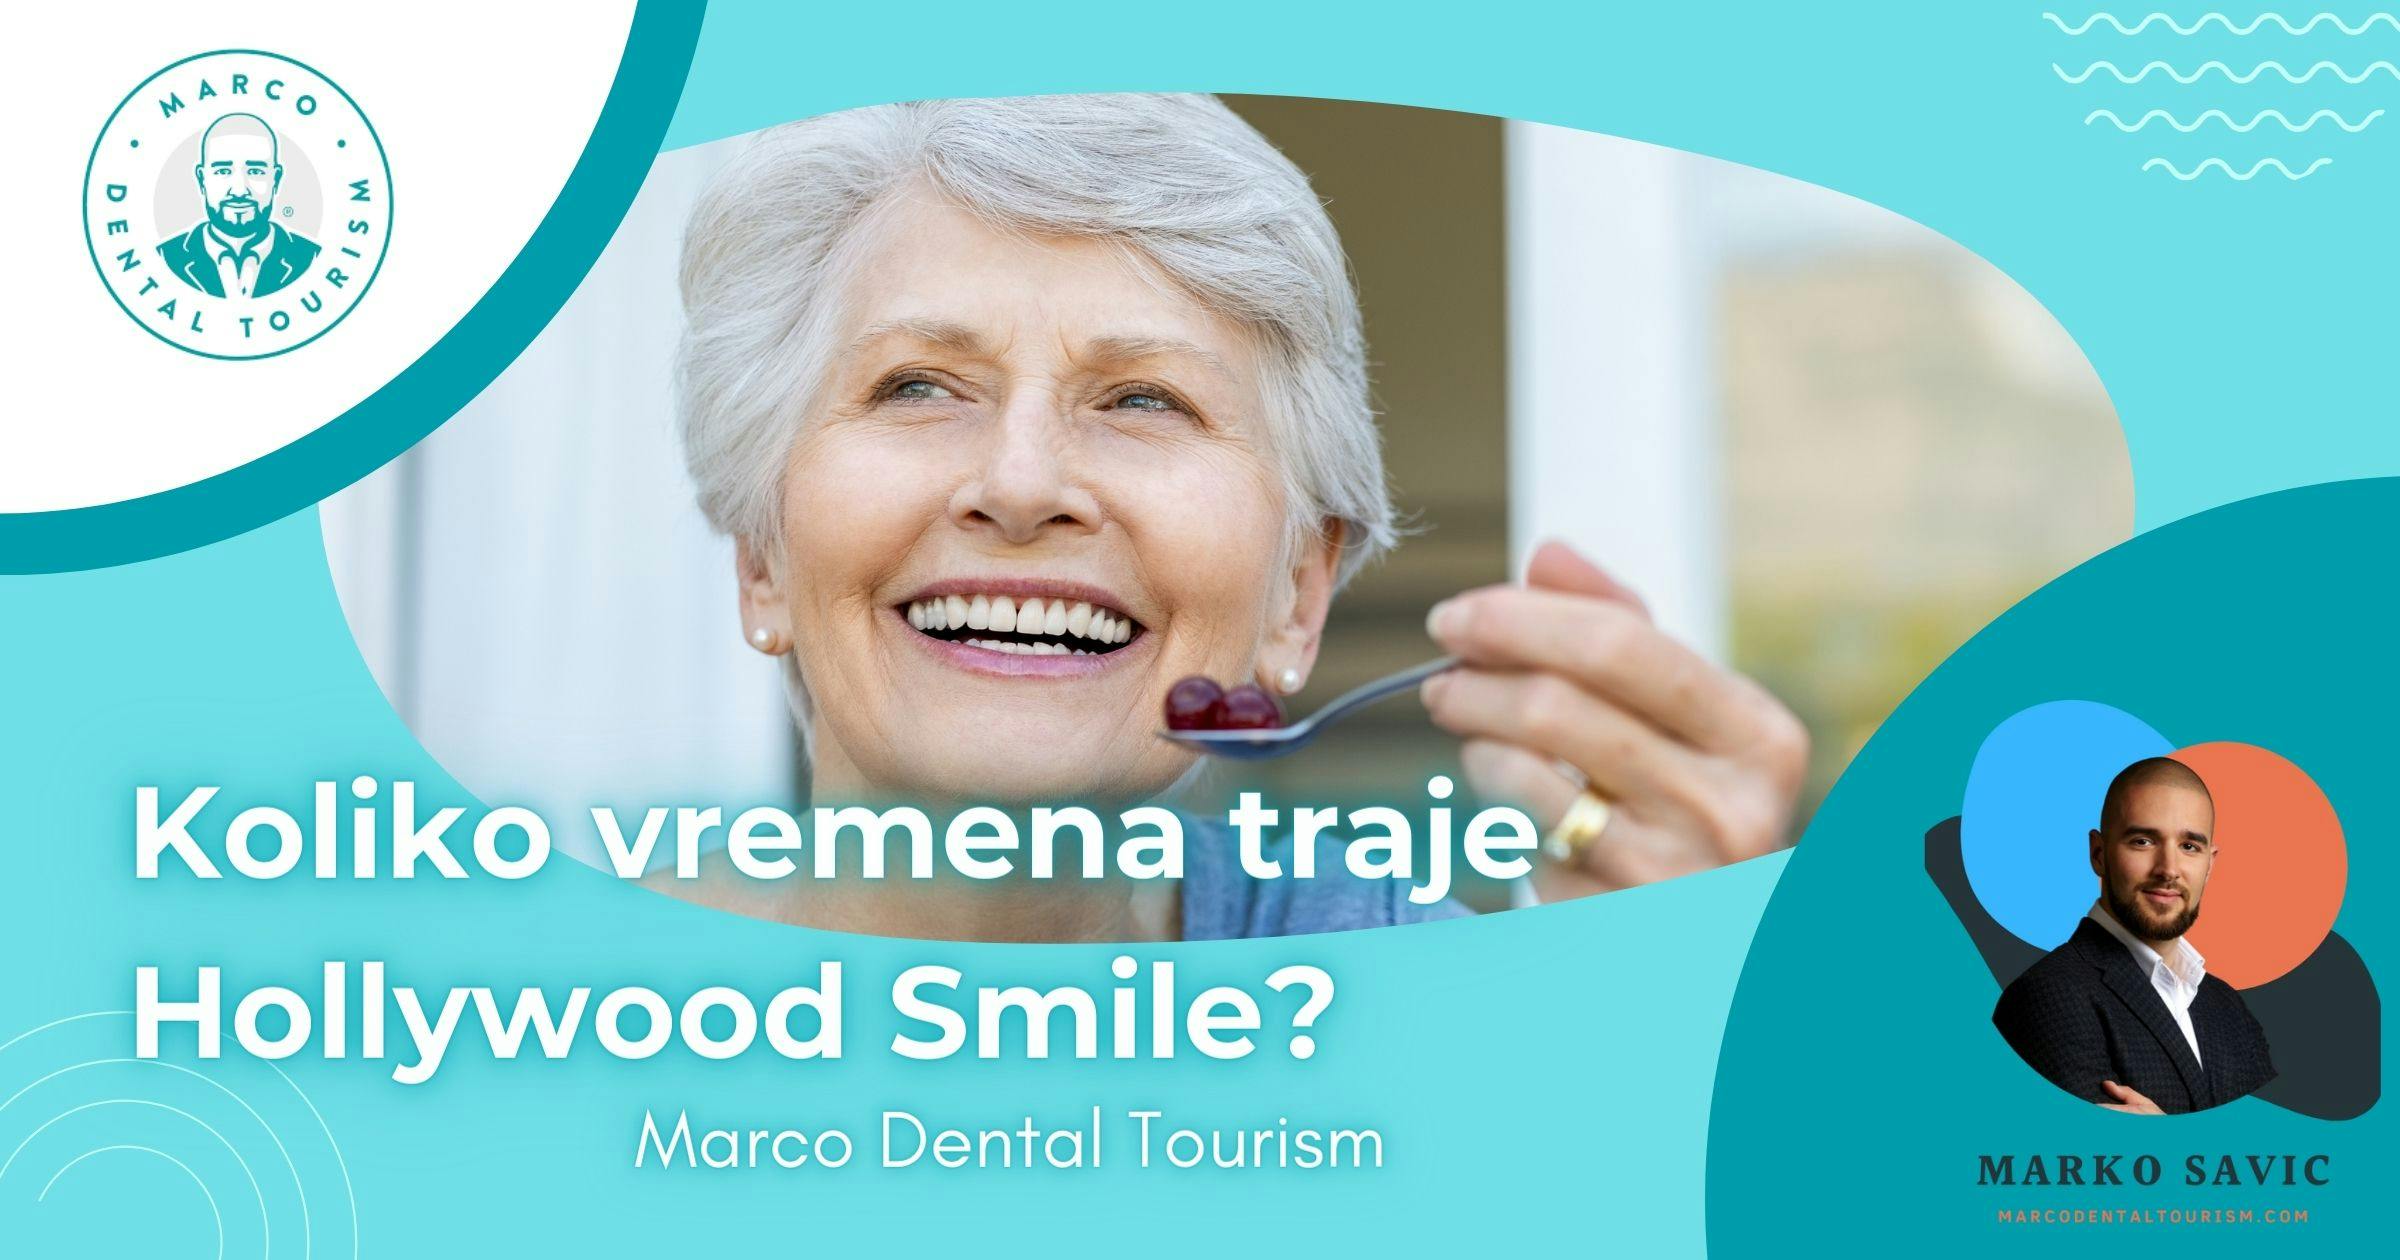 Koliko vremena traje Hollywood Smile - Marco Dental Tourism.jpg